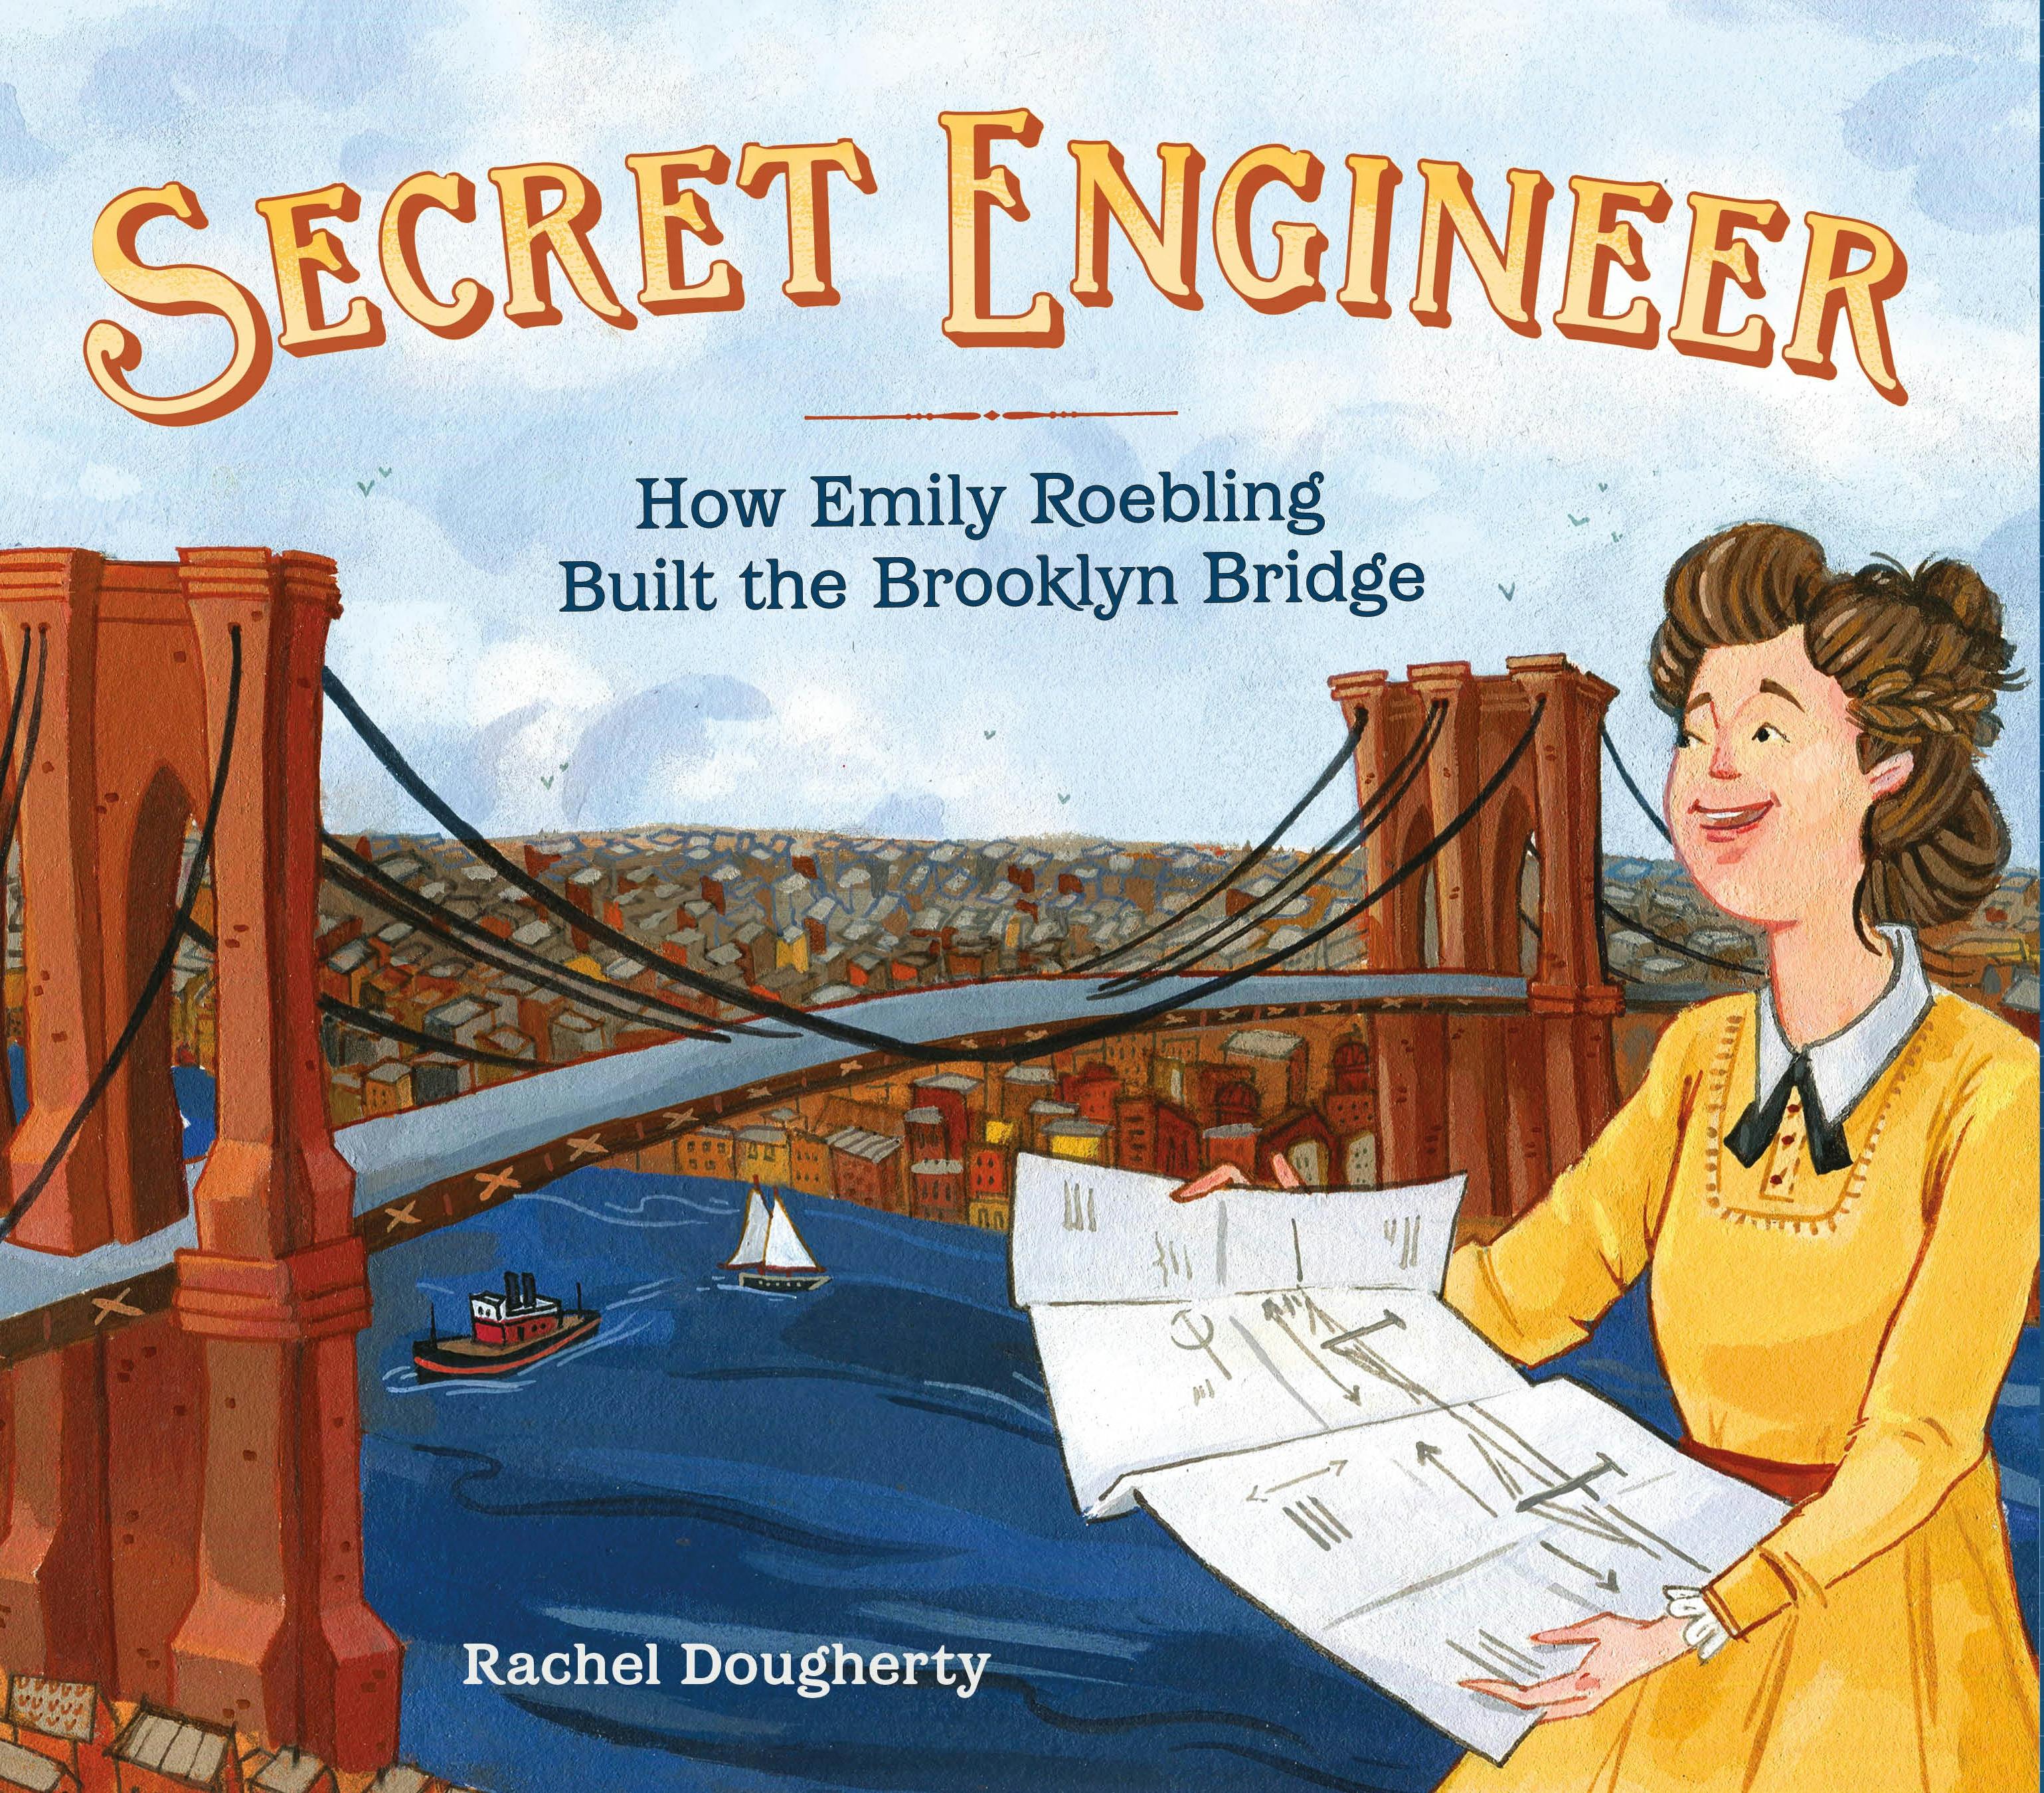 Roebling Secret Engineer: How Emily the Built Bridge Brooklyn